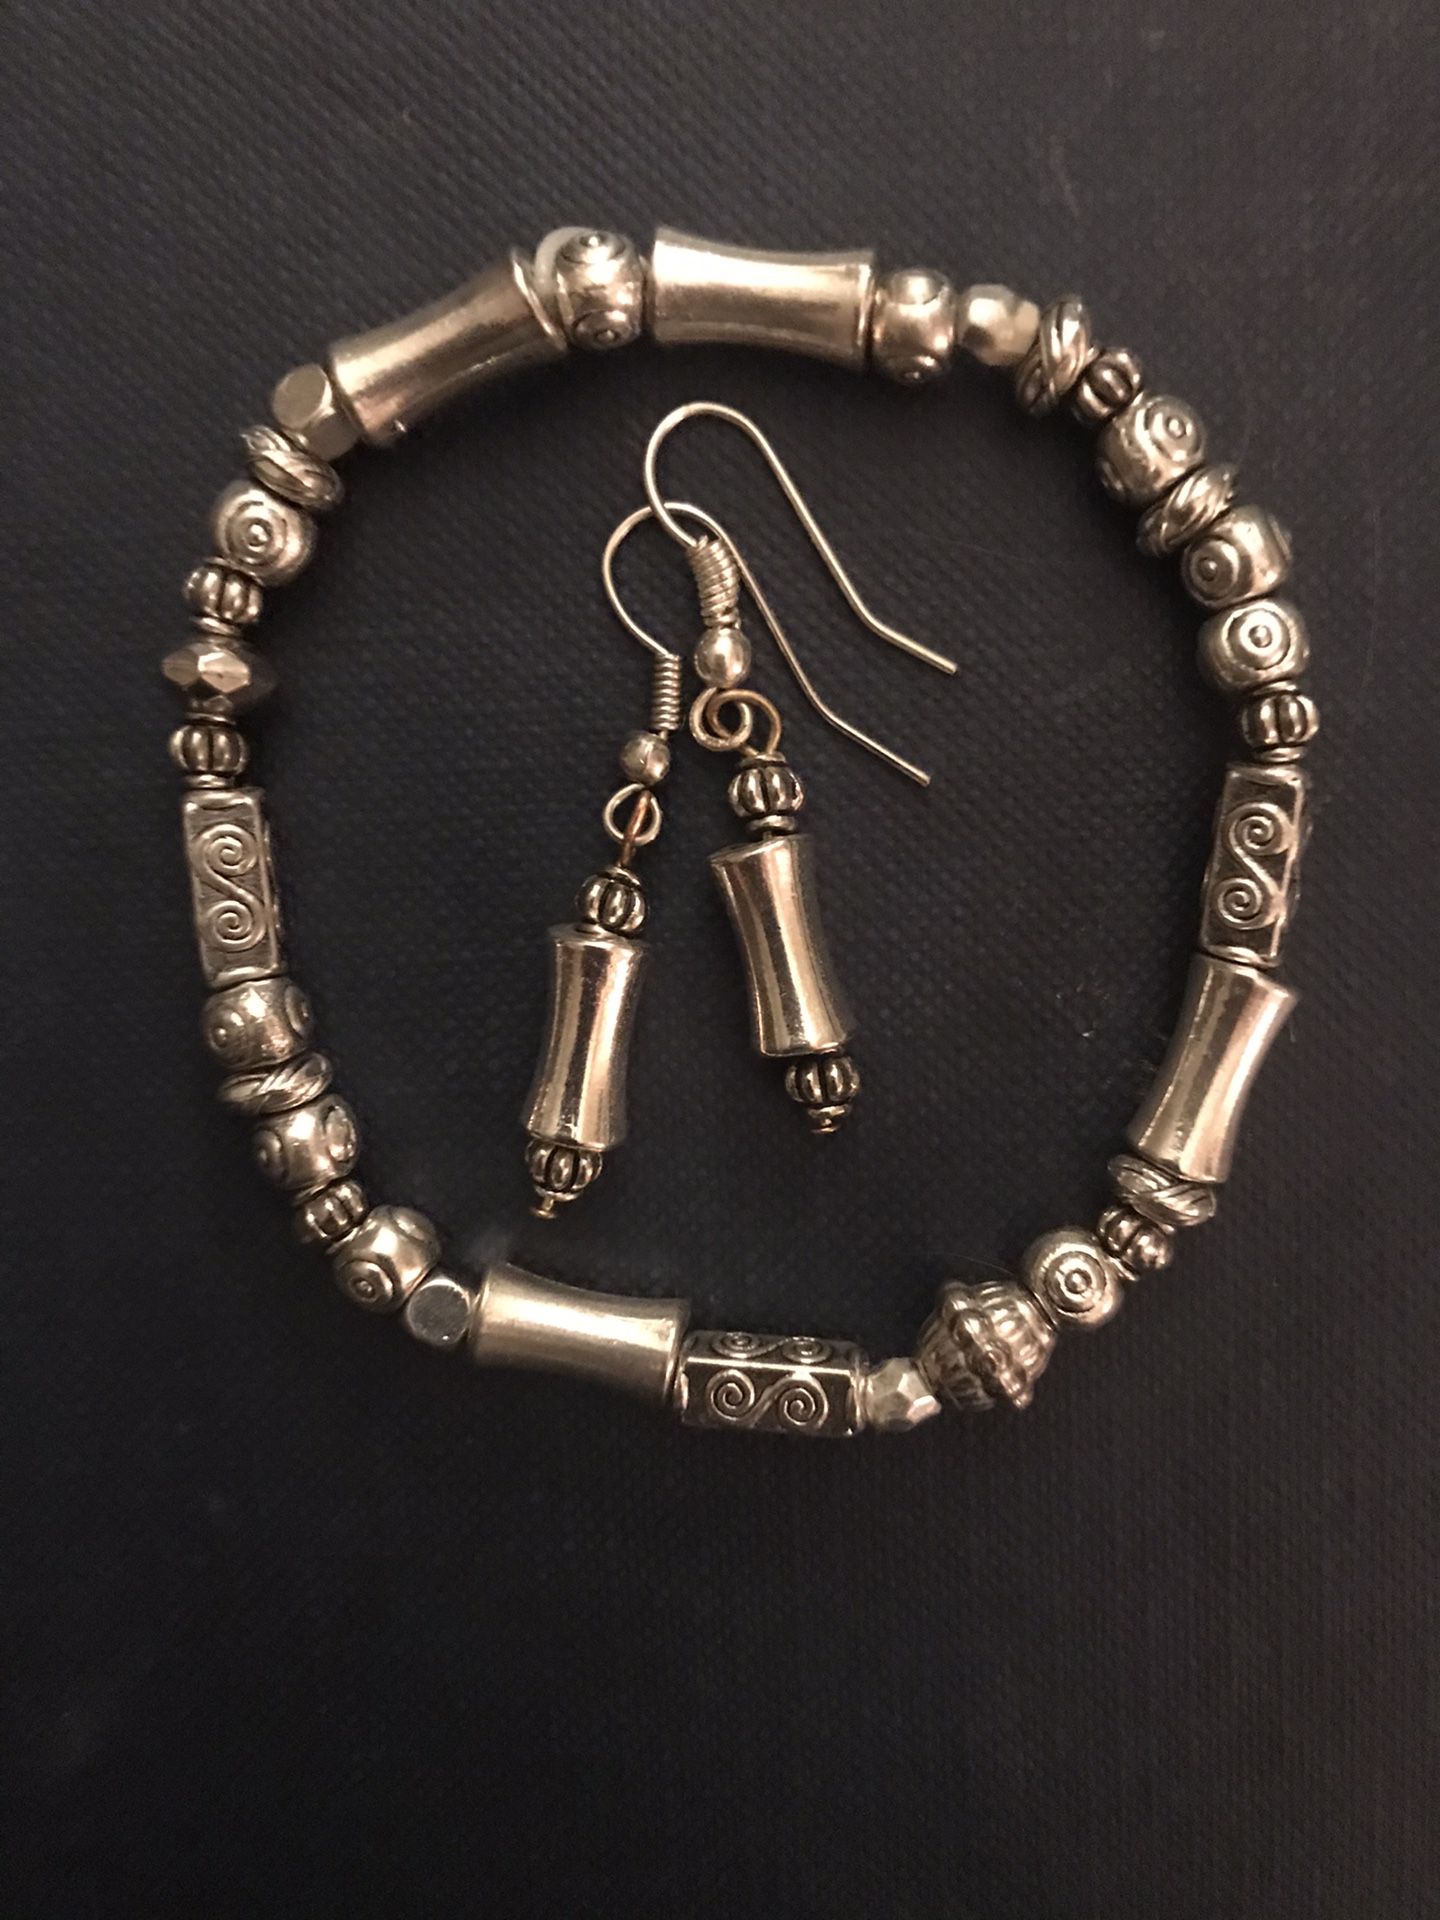 Handmade silver jewelry